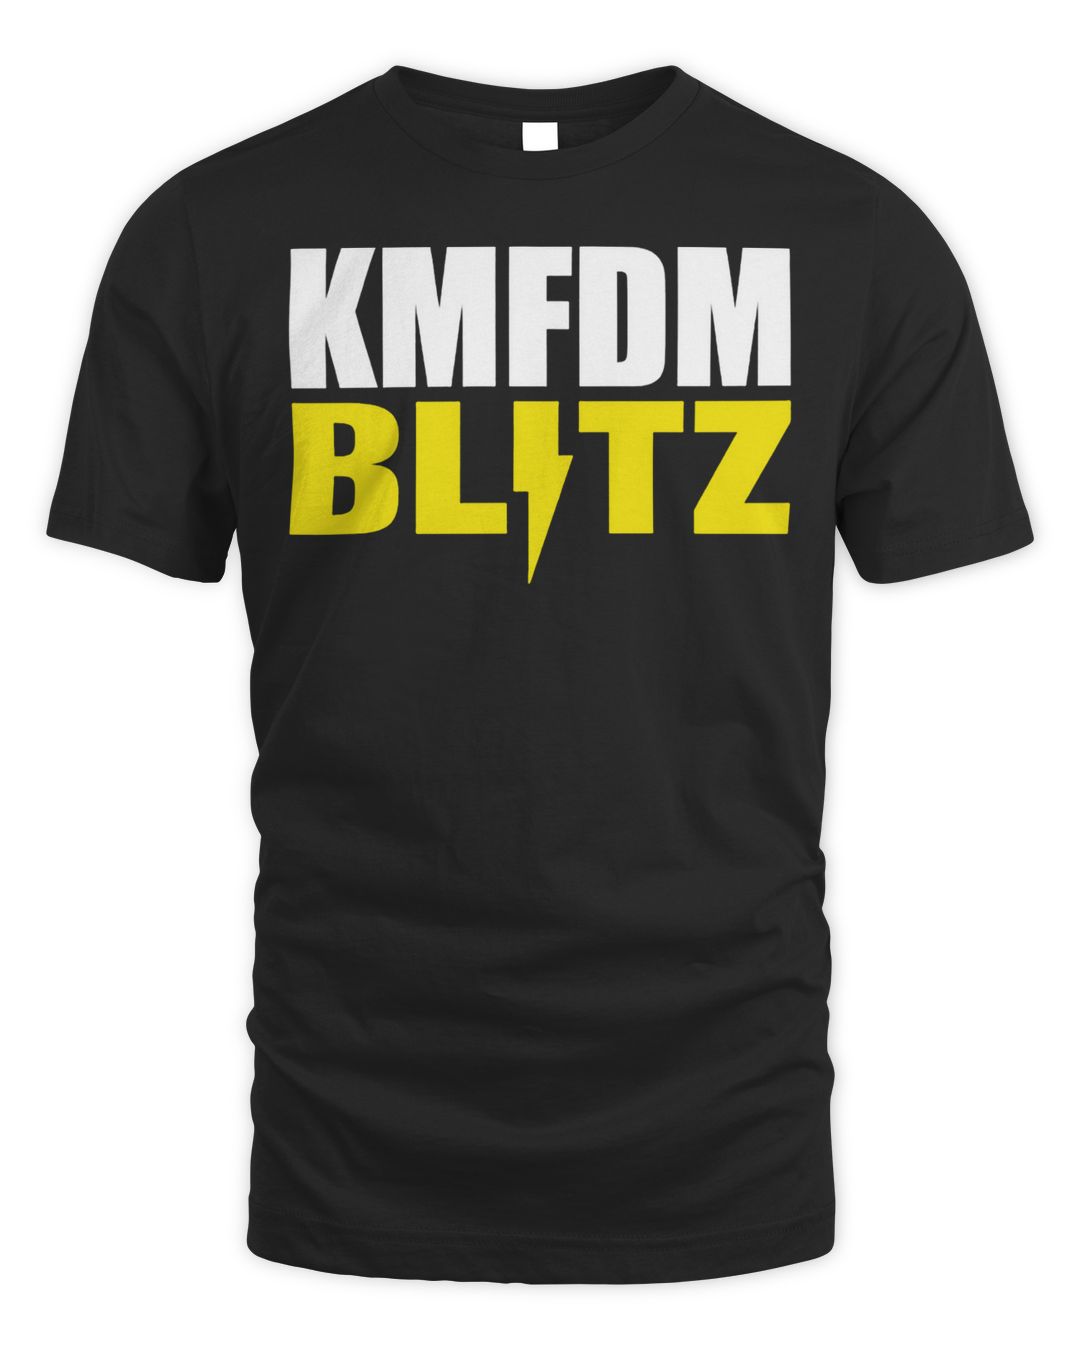 Kmfdm Merch Blitz 10th Anny Shirt